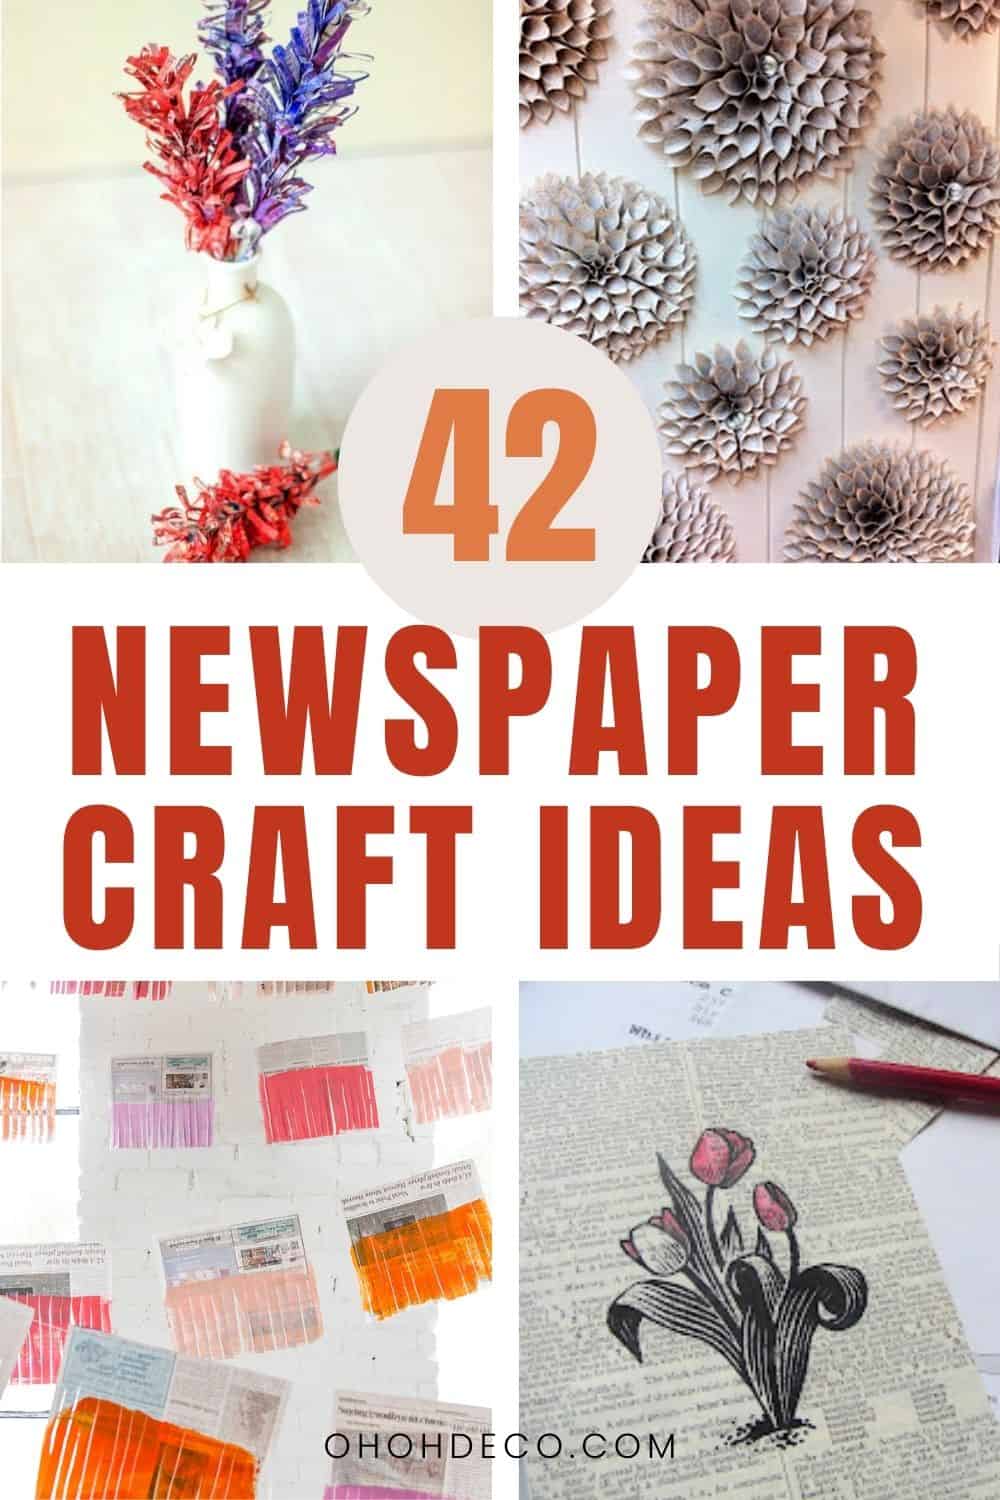 Newspaper craft ideas